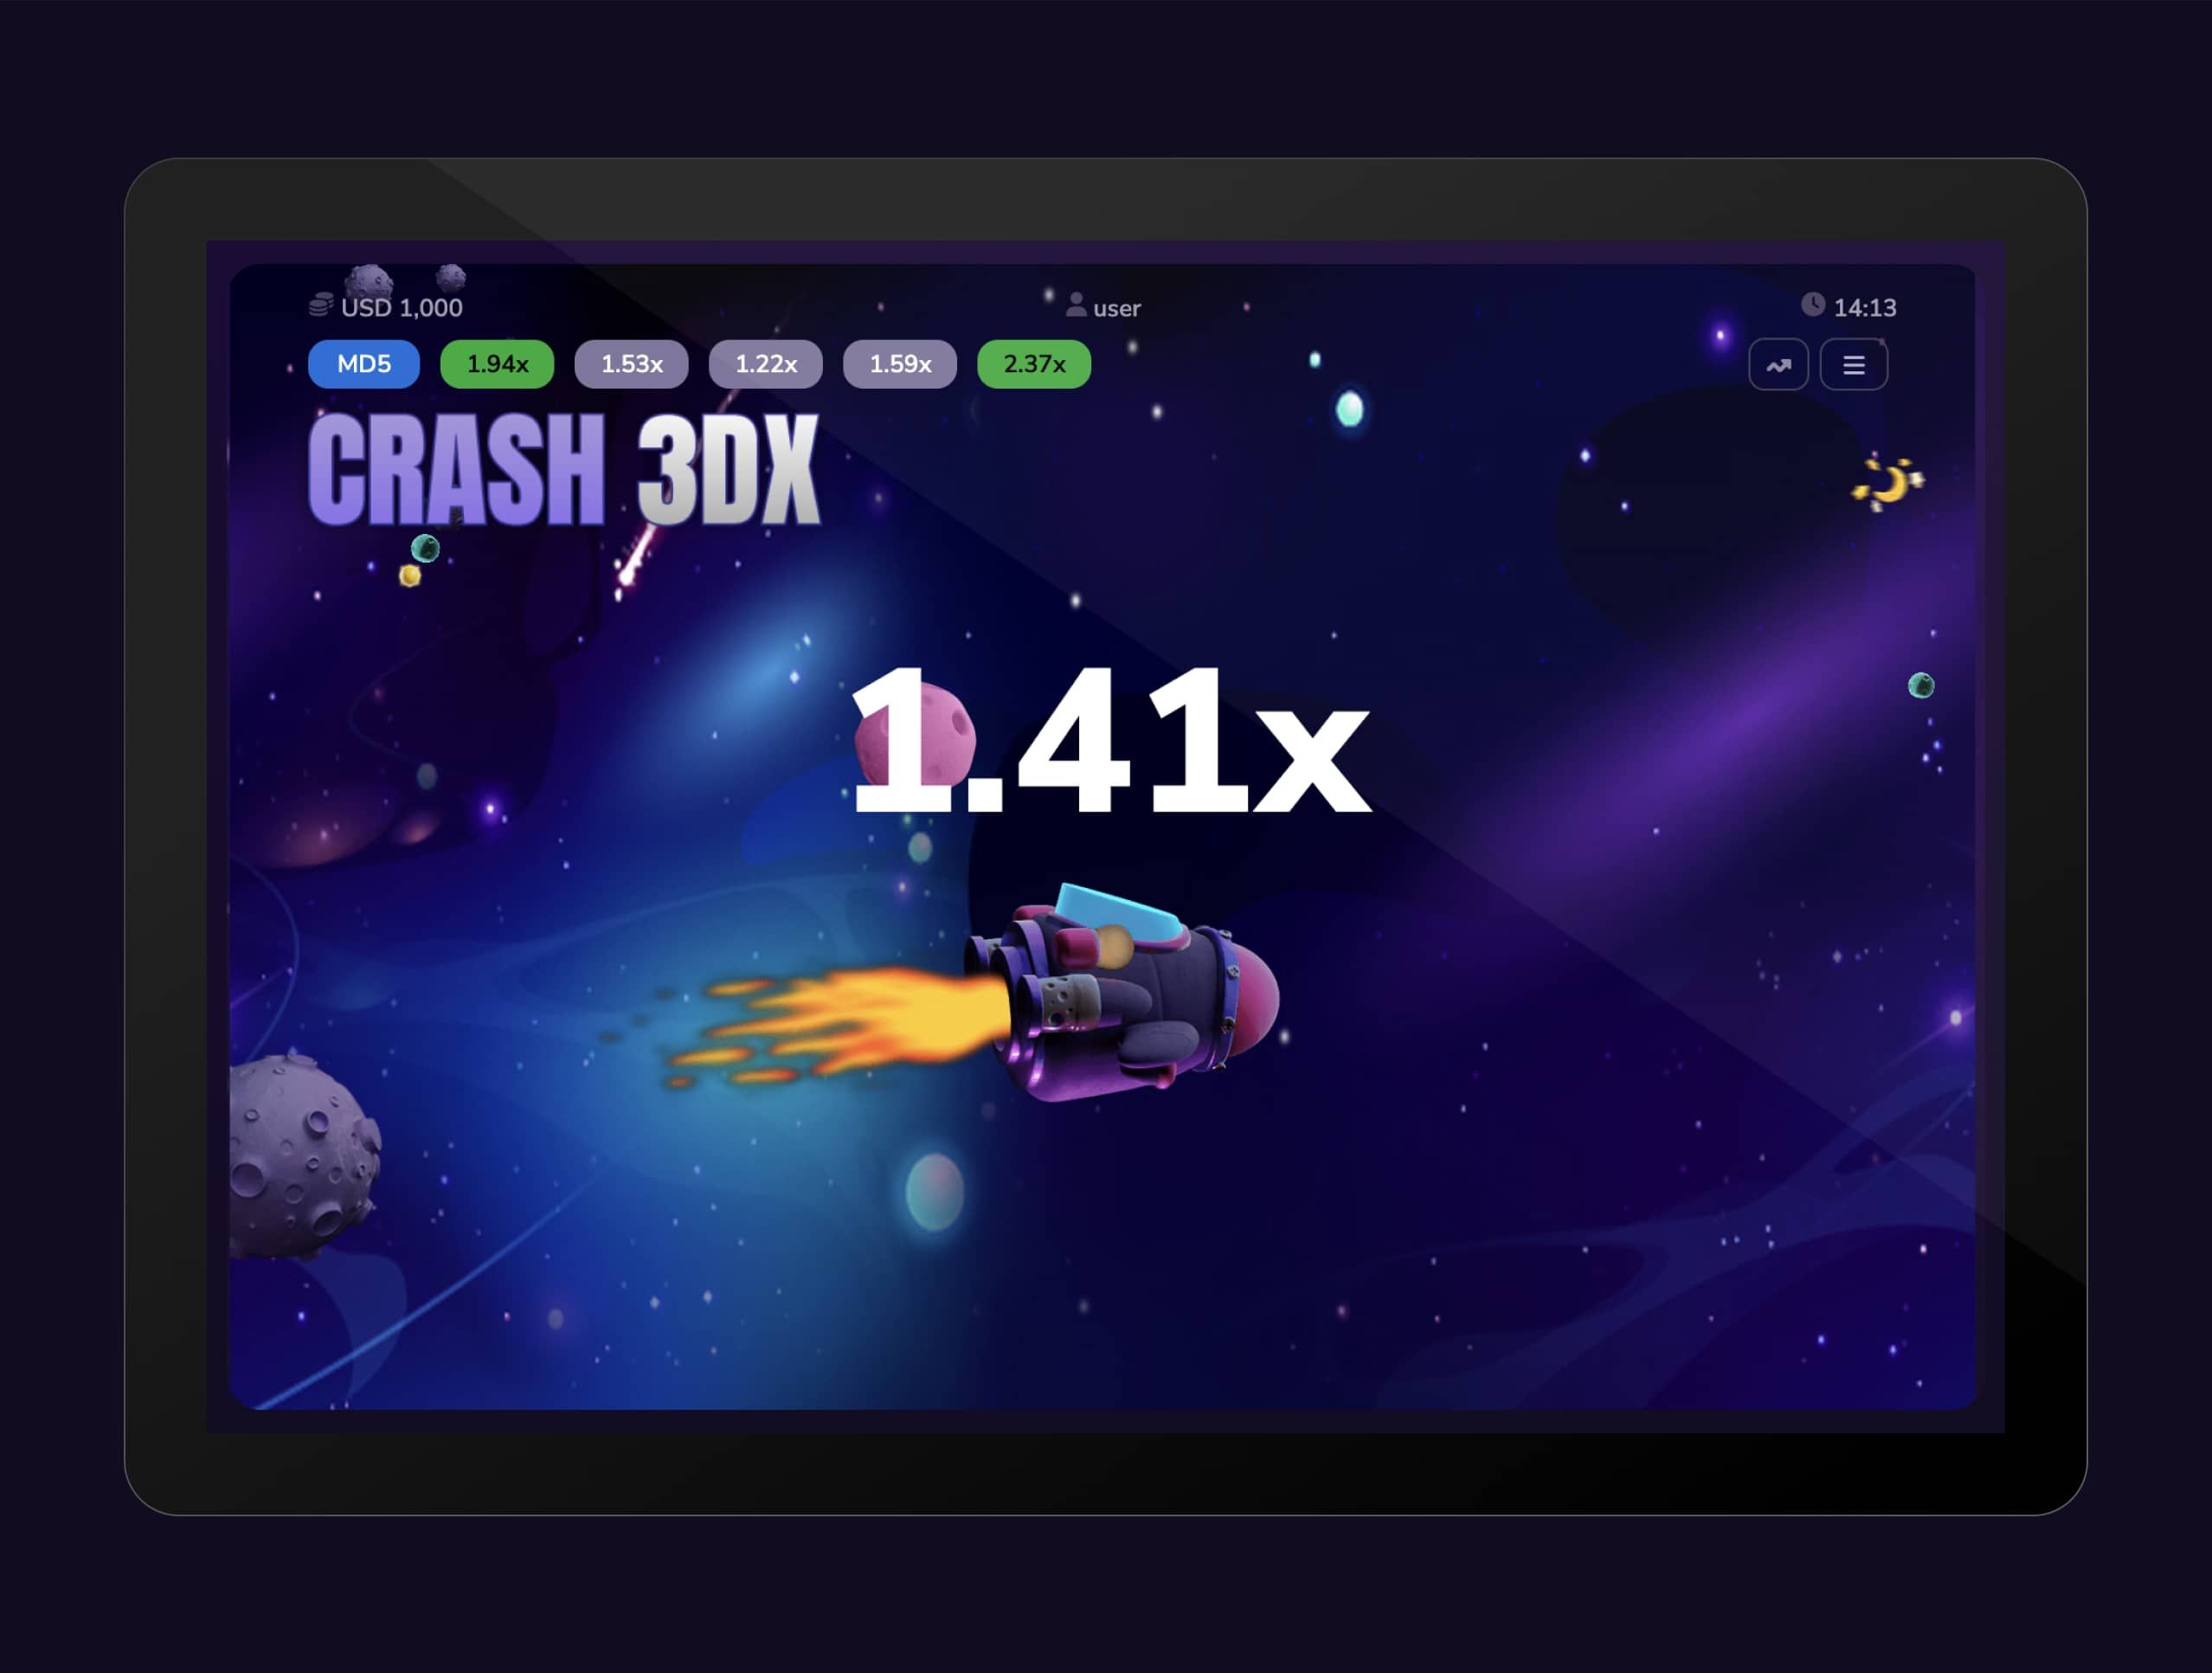 Crash 3DX - Overview Gameplay Image